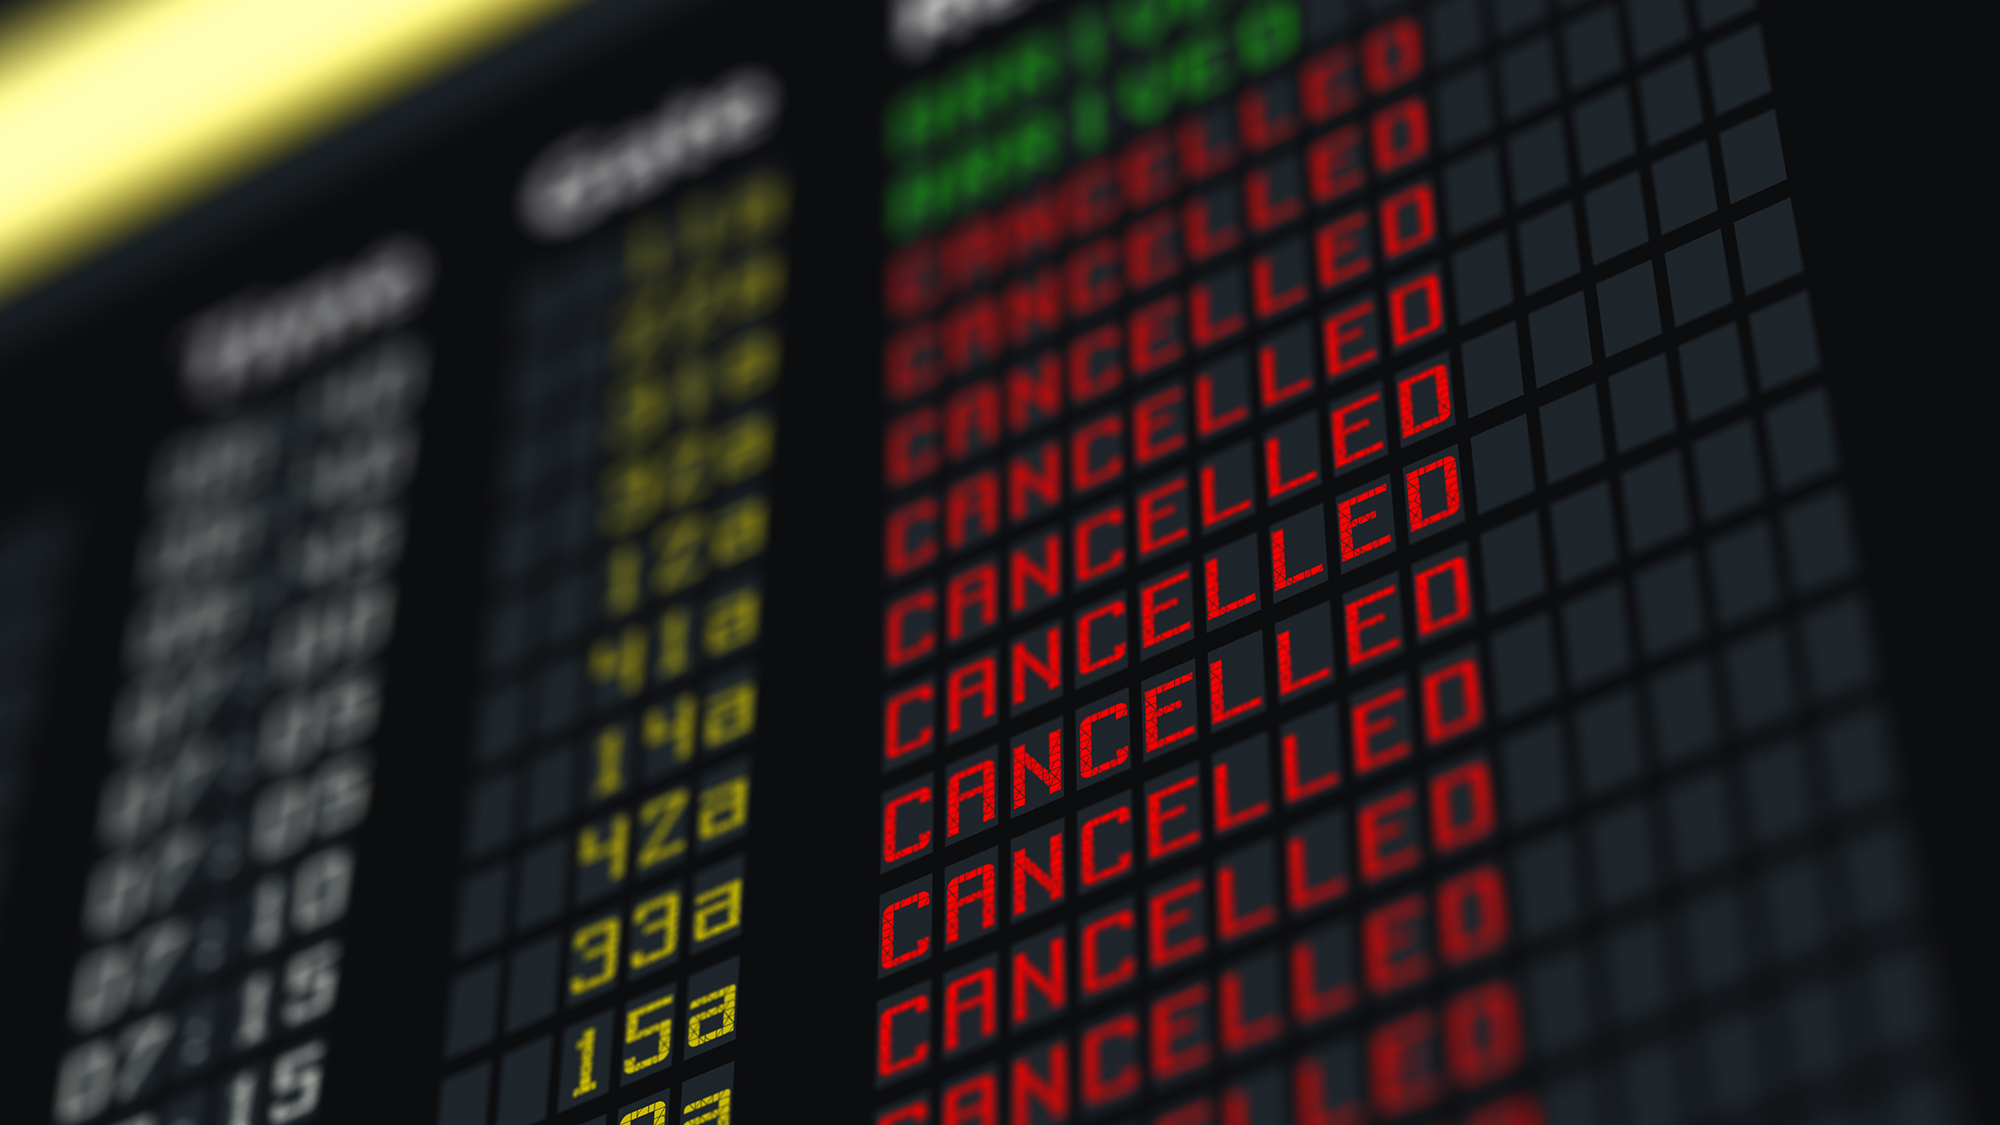 Flight cancellations. (Image: Shutterstock)